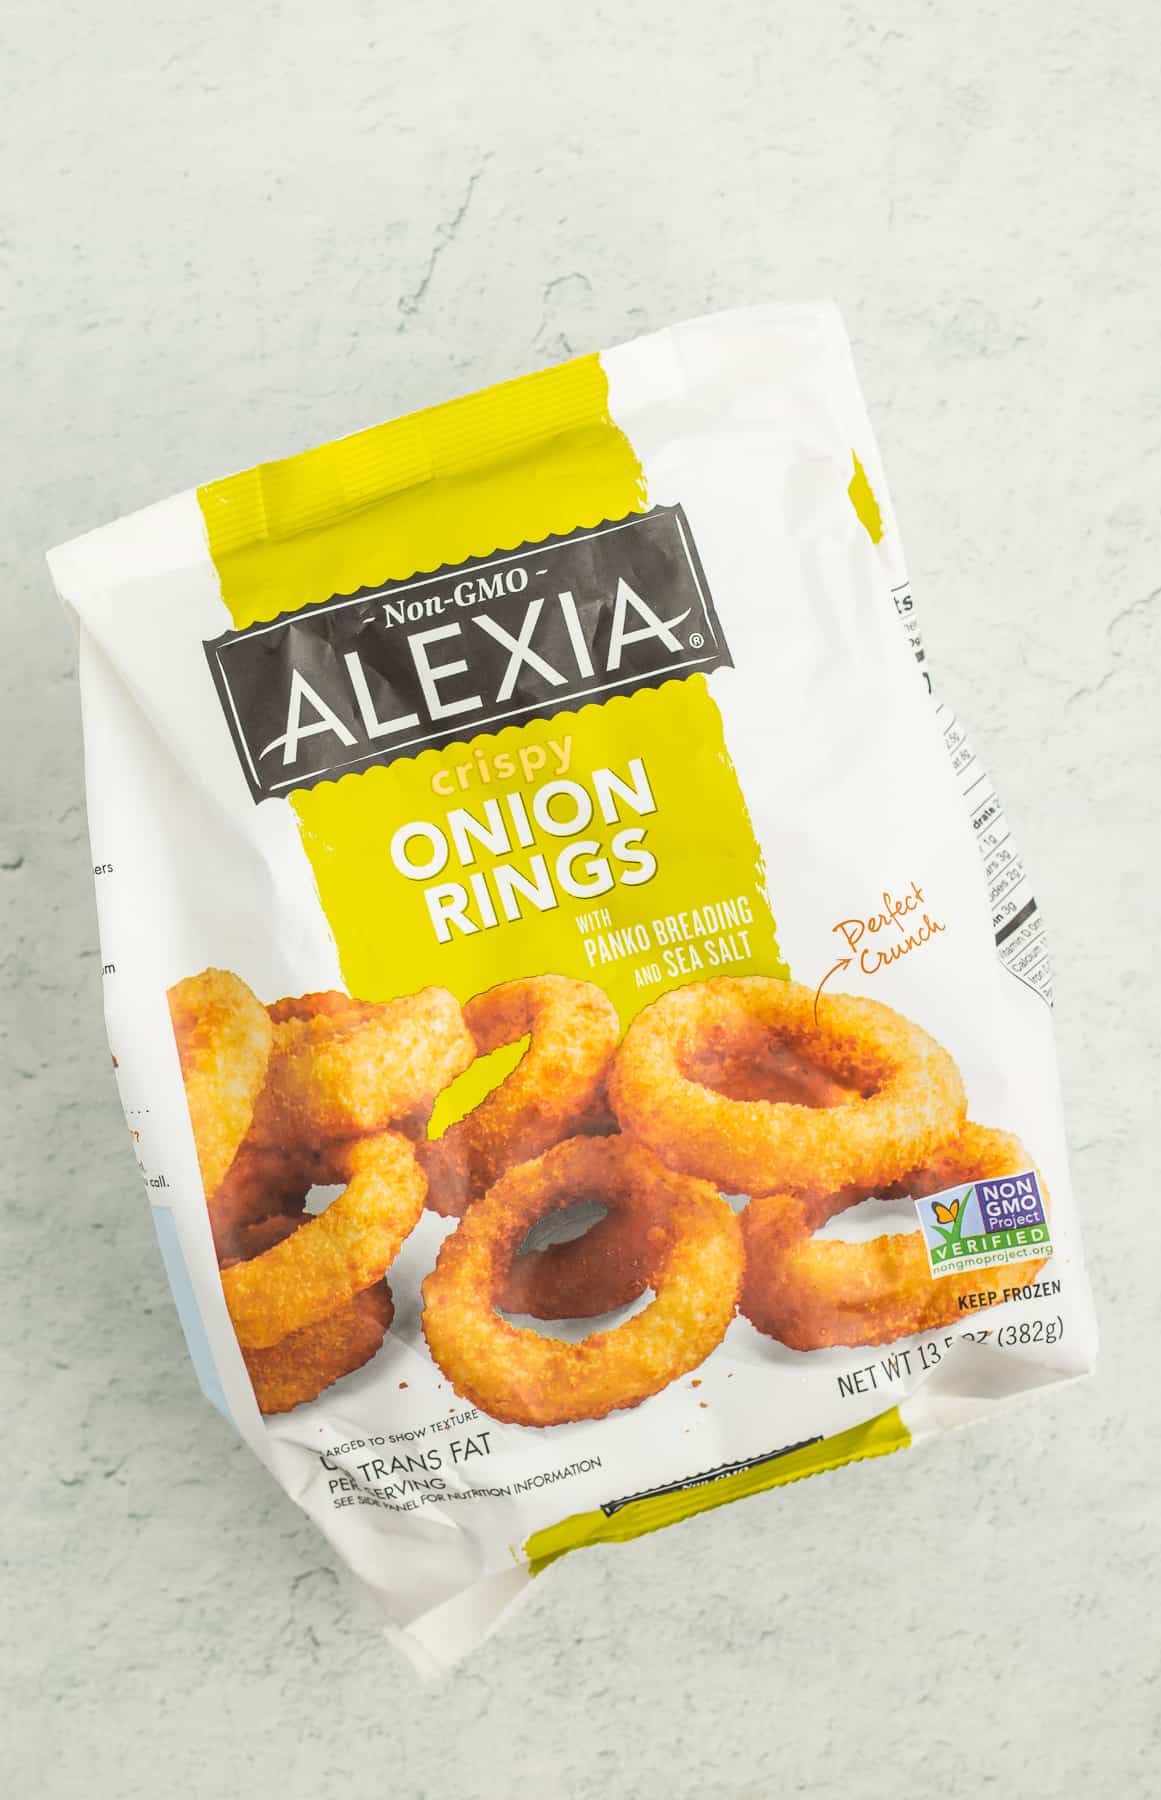 a bag of Alexia frozen onion rings.